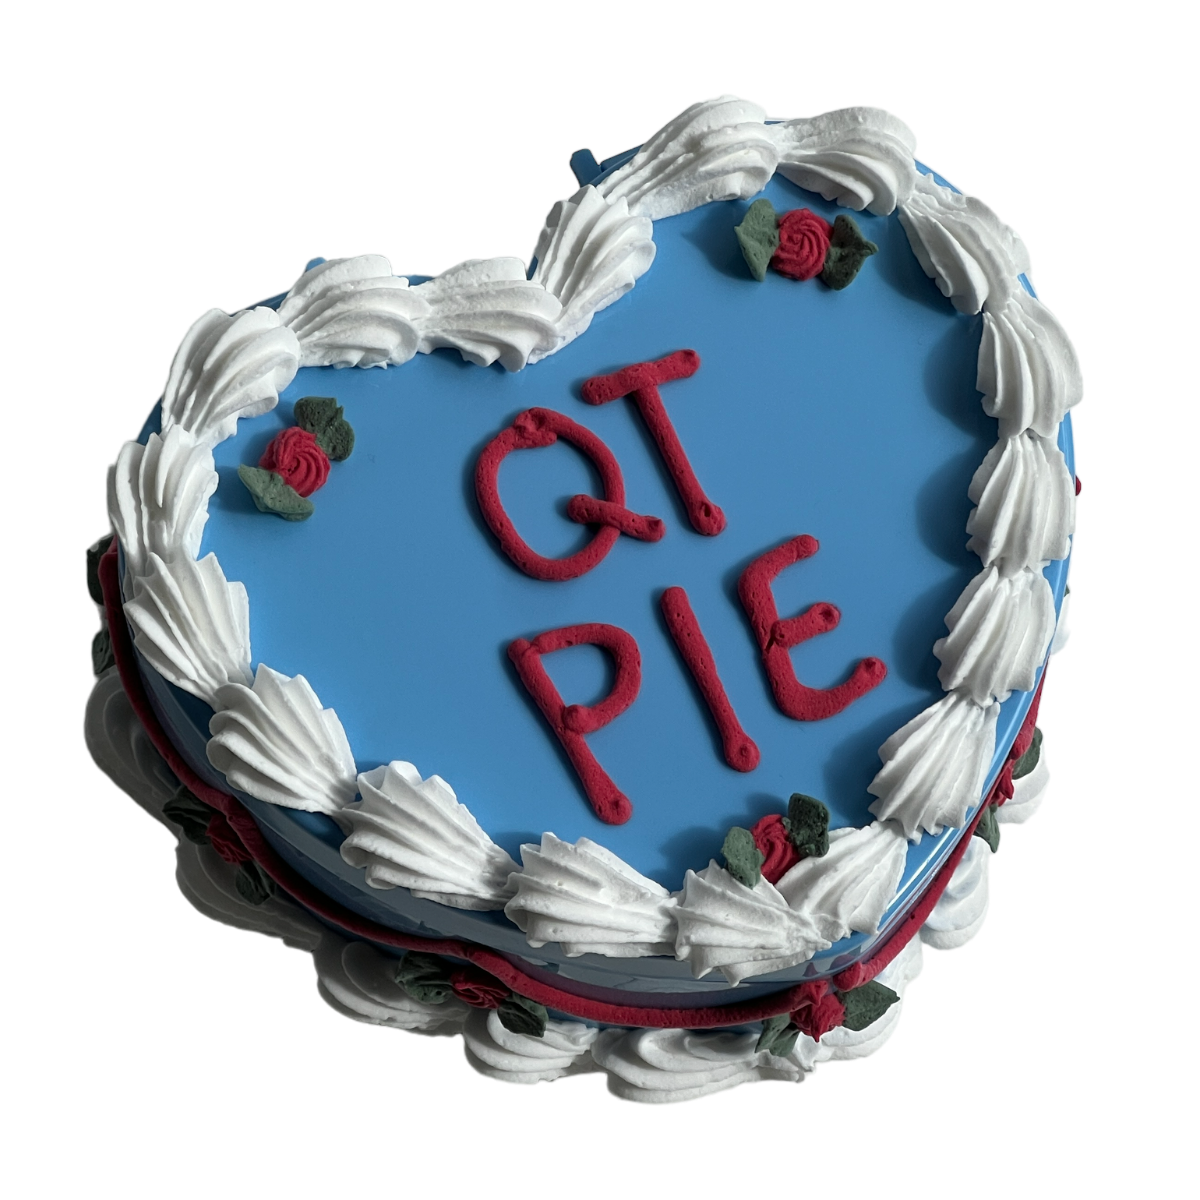 QT Pie